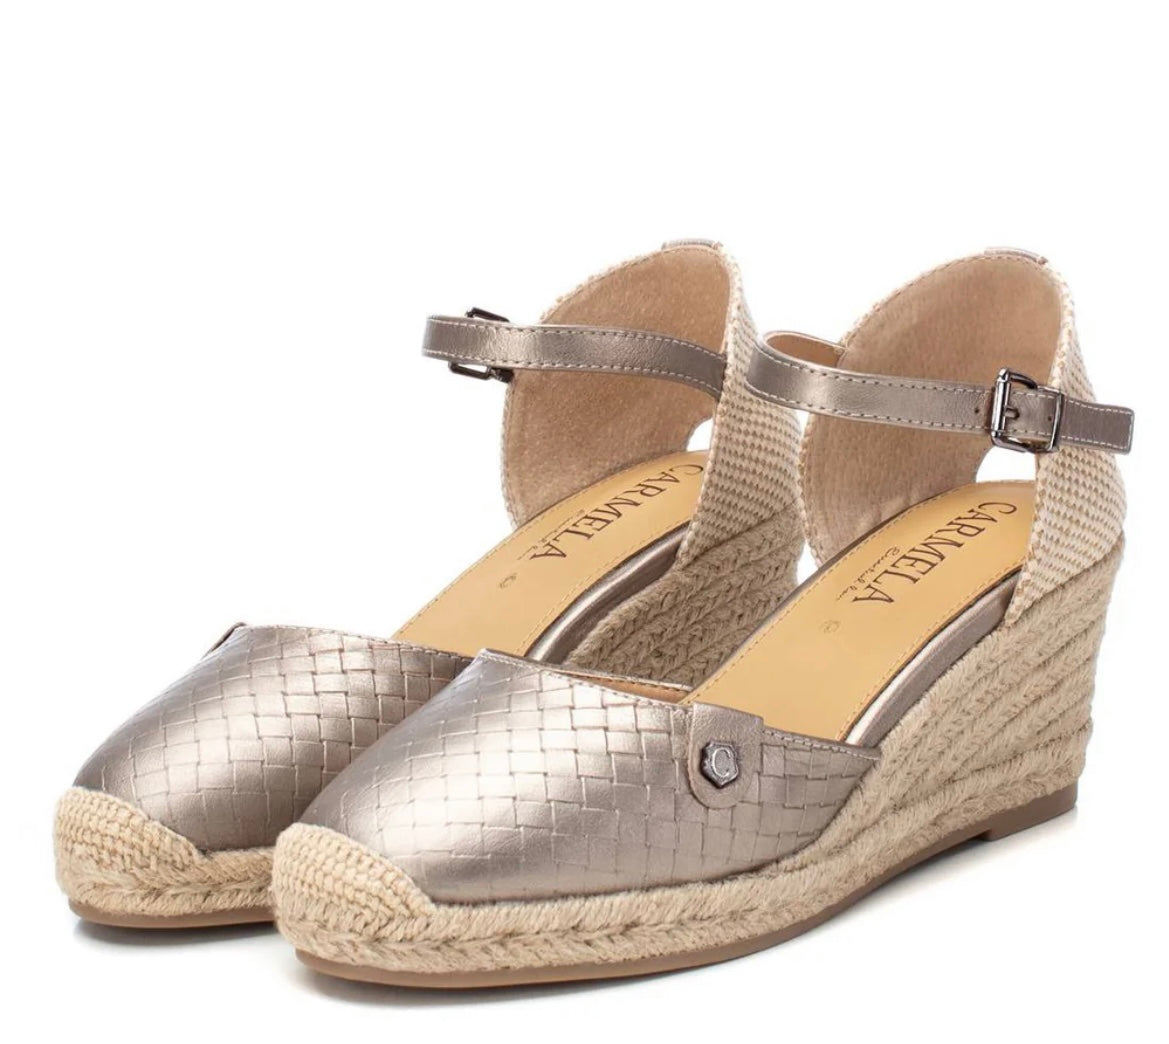 Carmela metallic leather wedge shoe